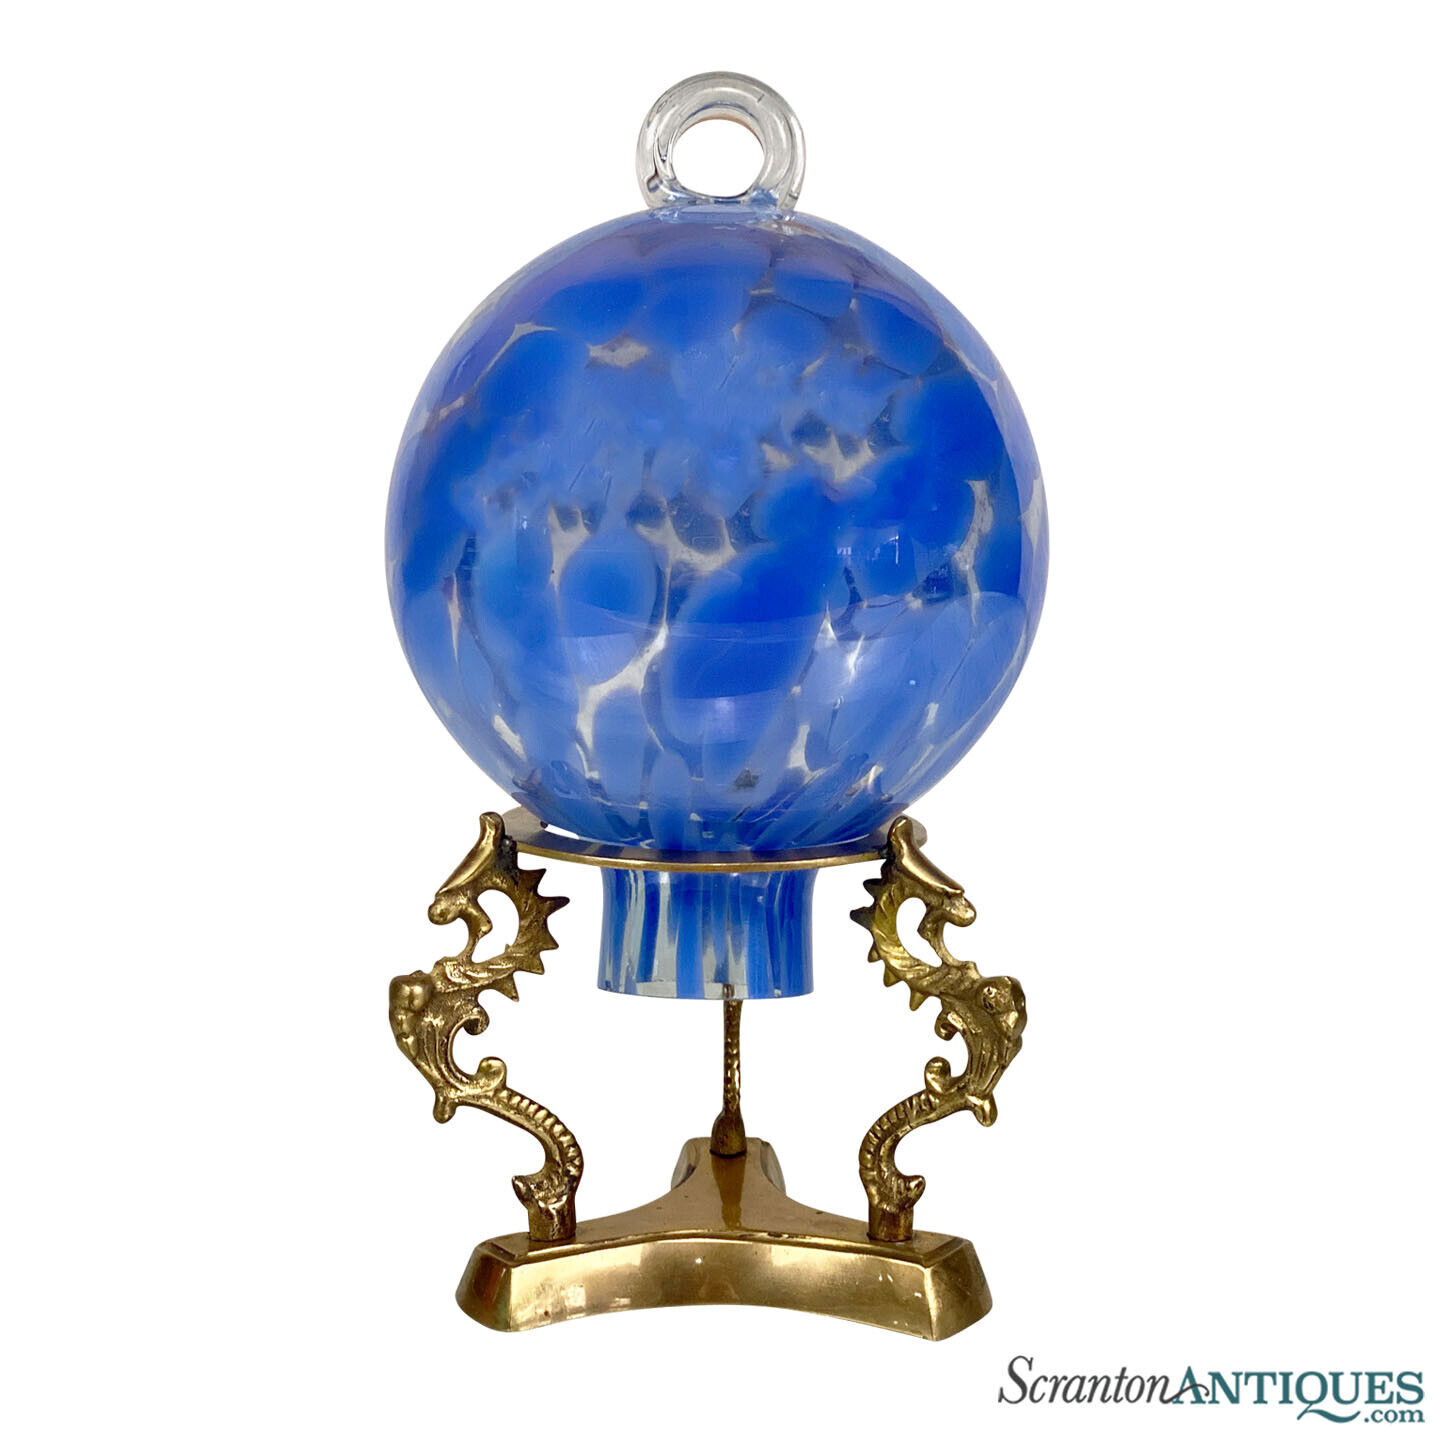 Vintage Traditional Victorian Brass & Blown Glass Sculptural Ornament